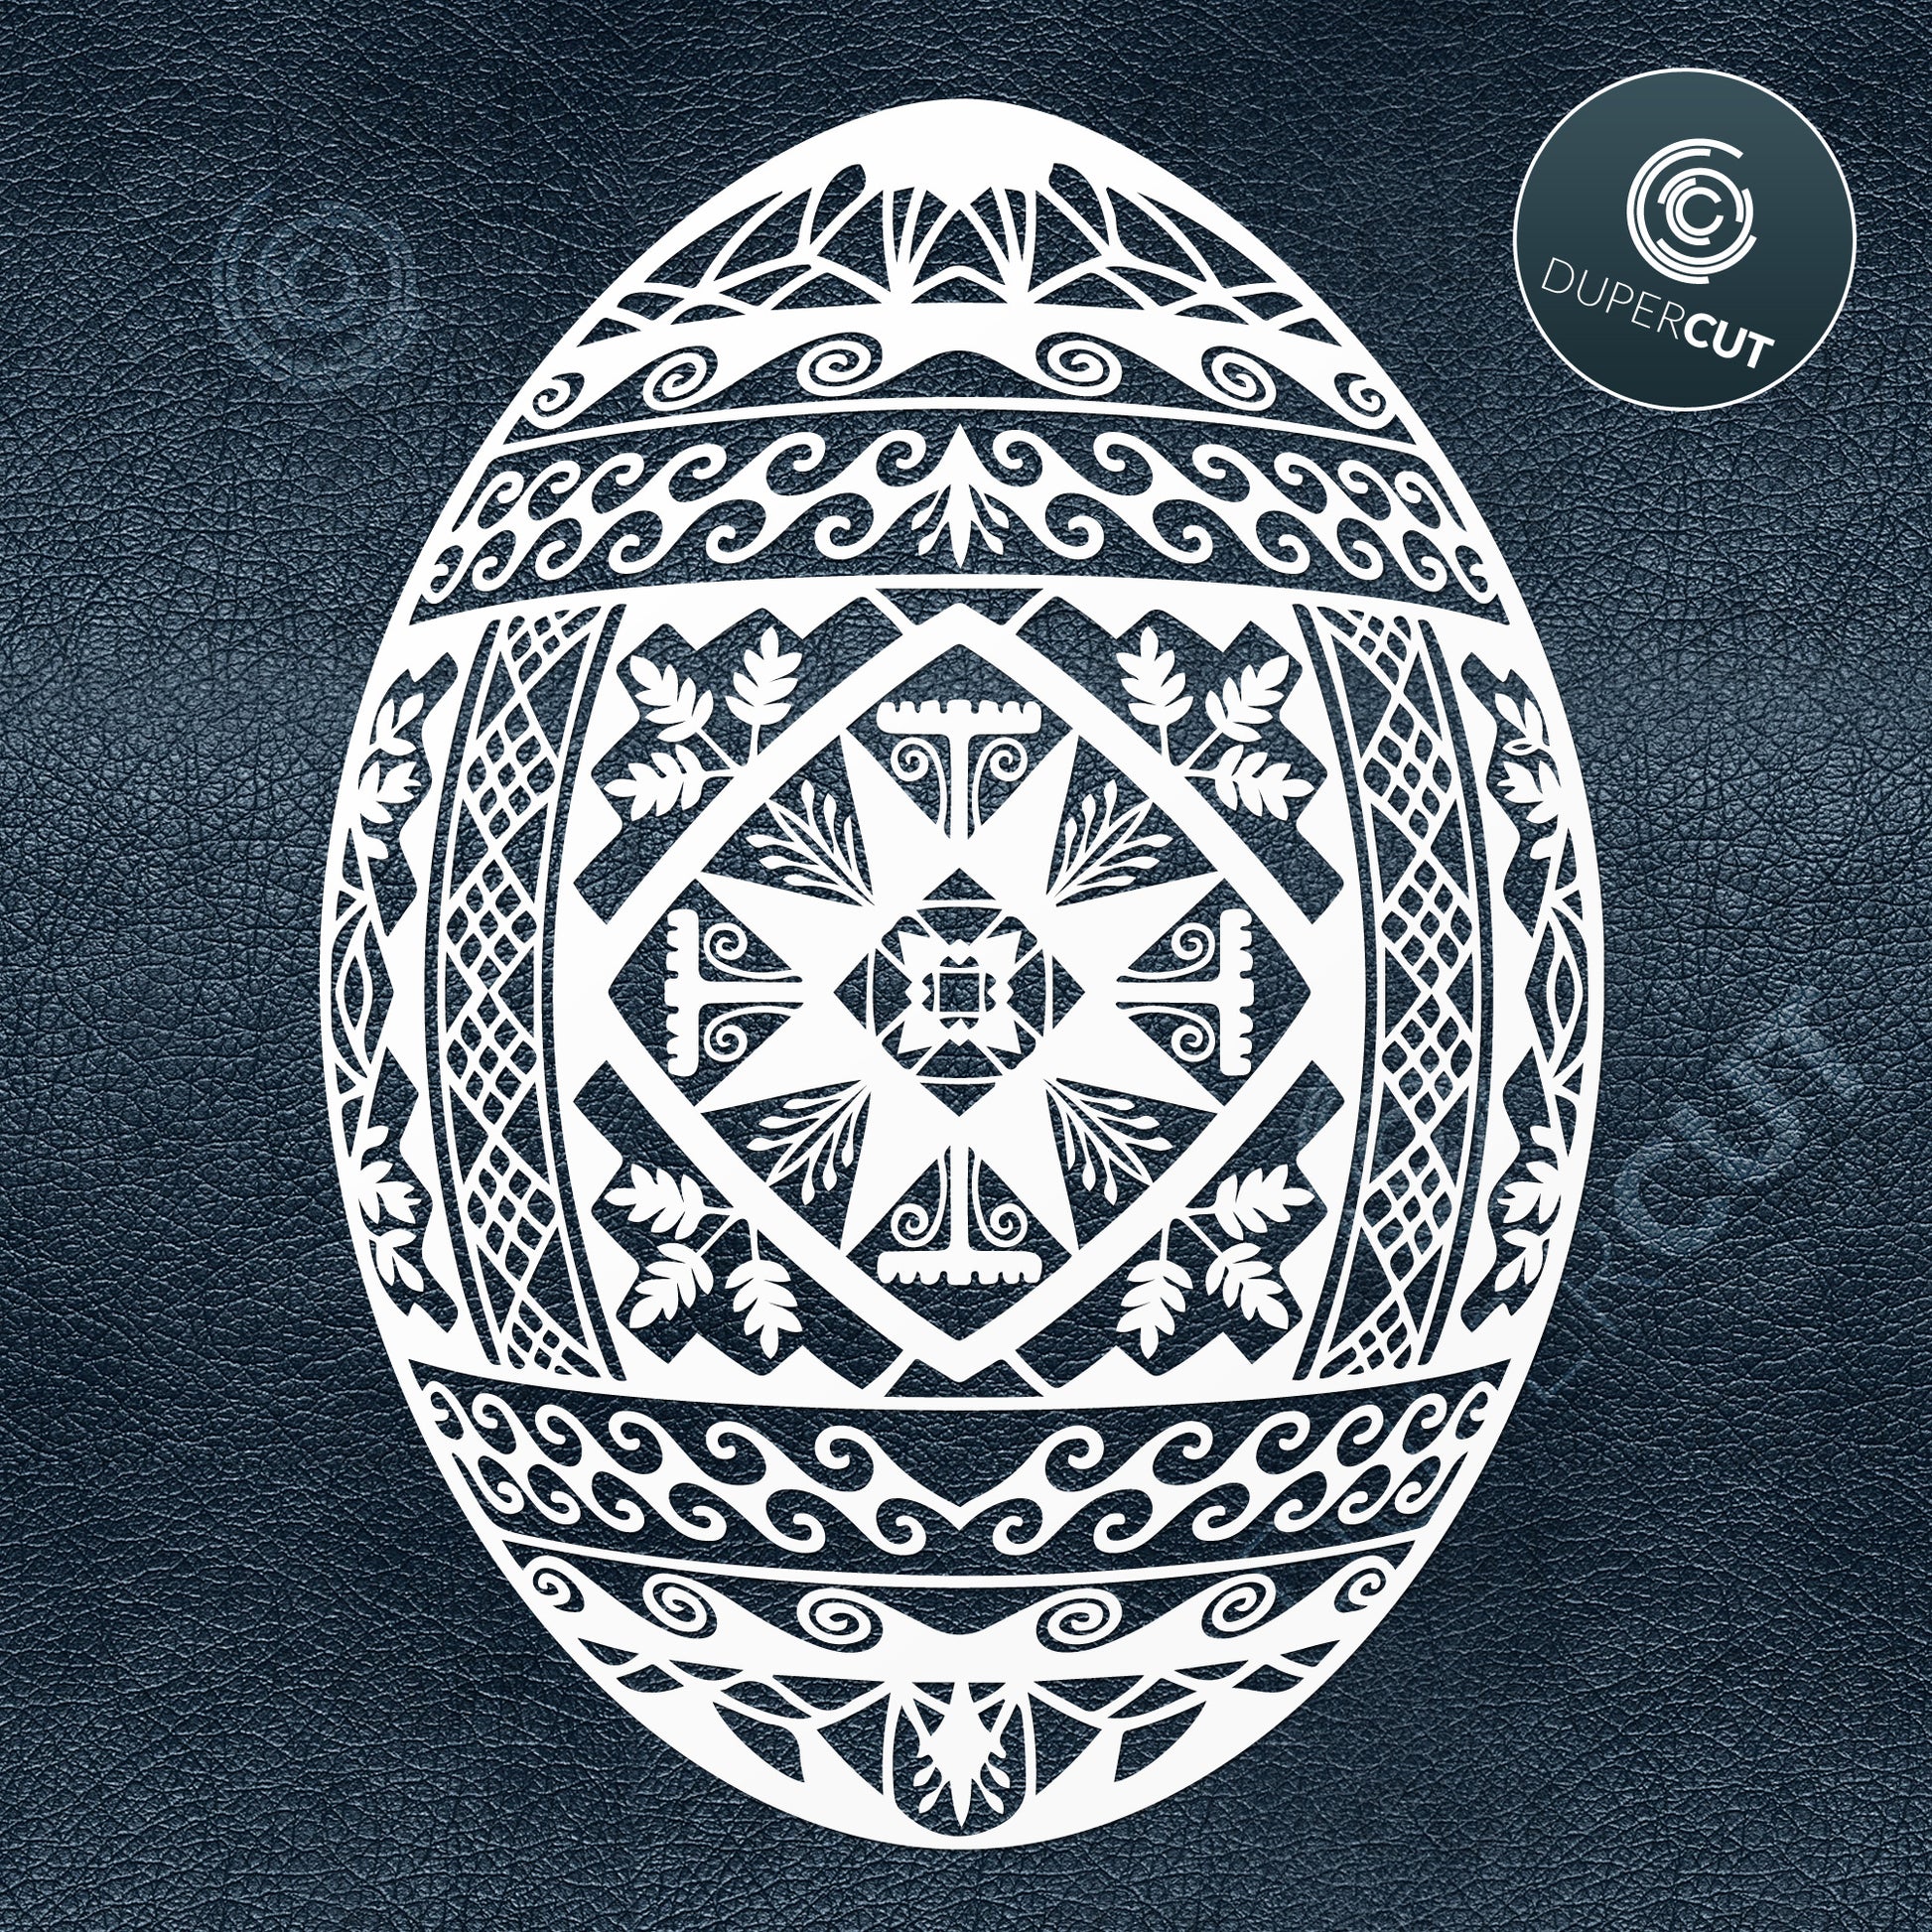 Easter Egg Cut & Print SVG PNG